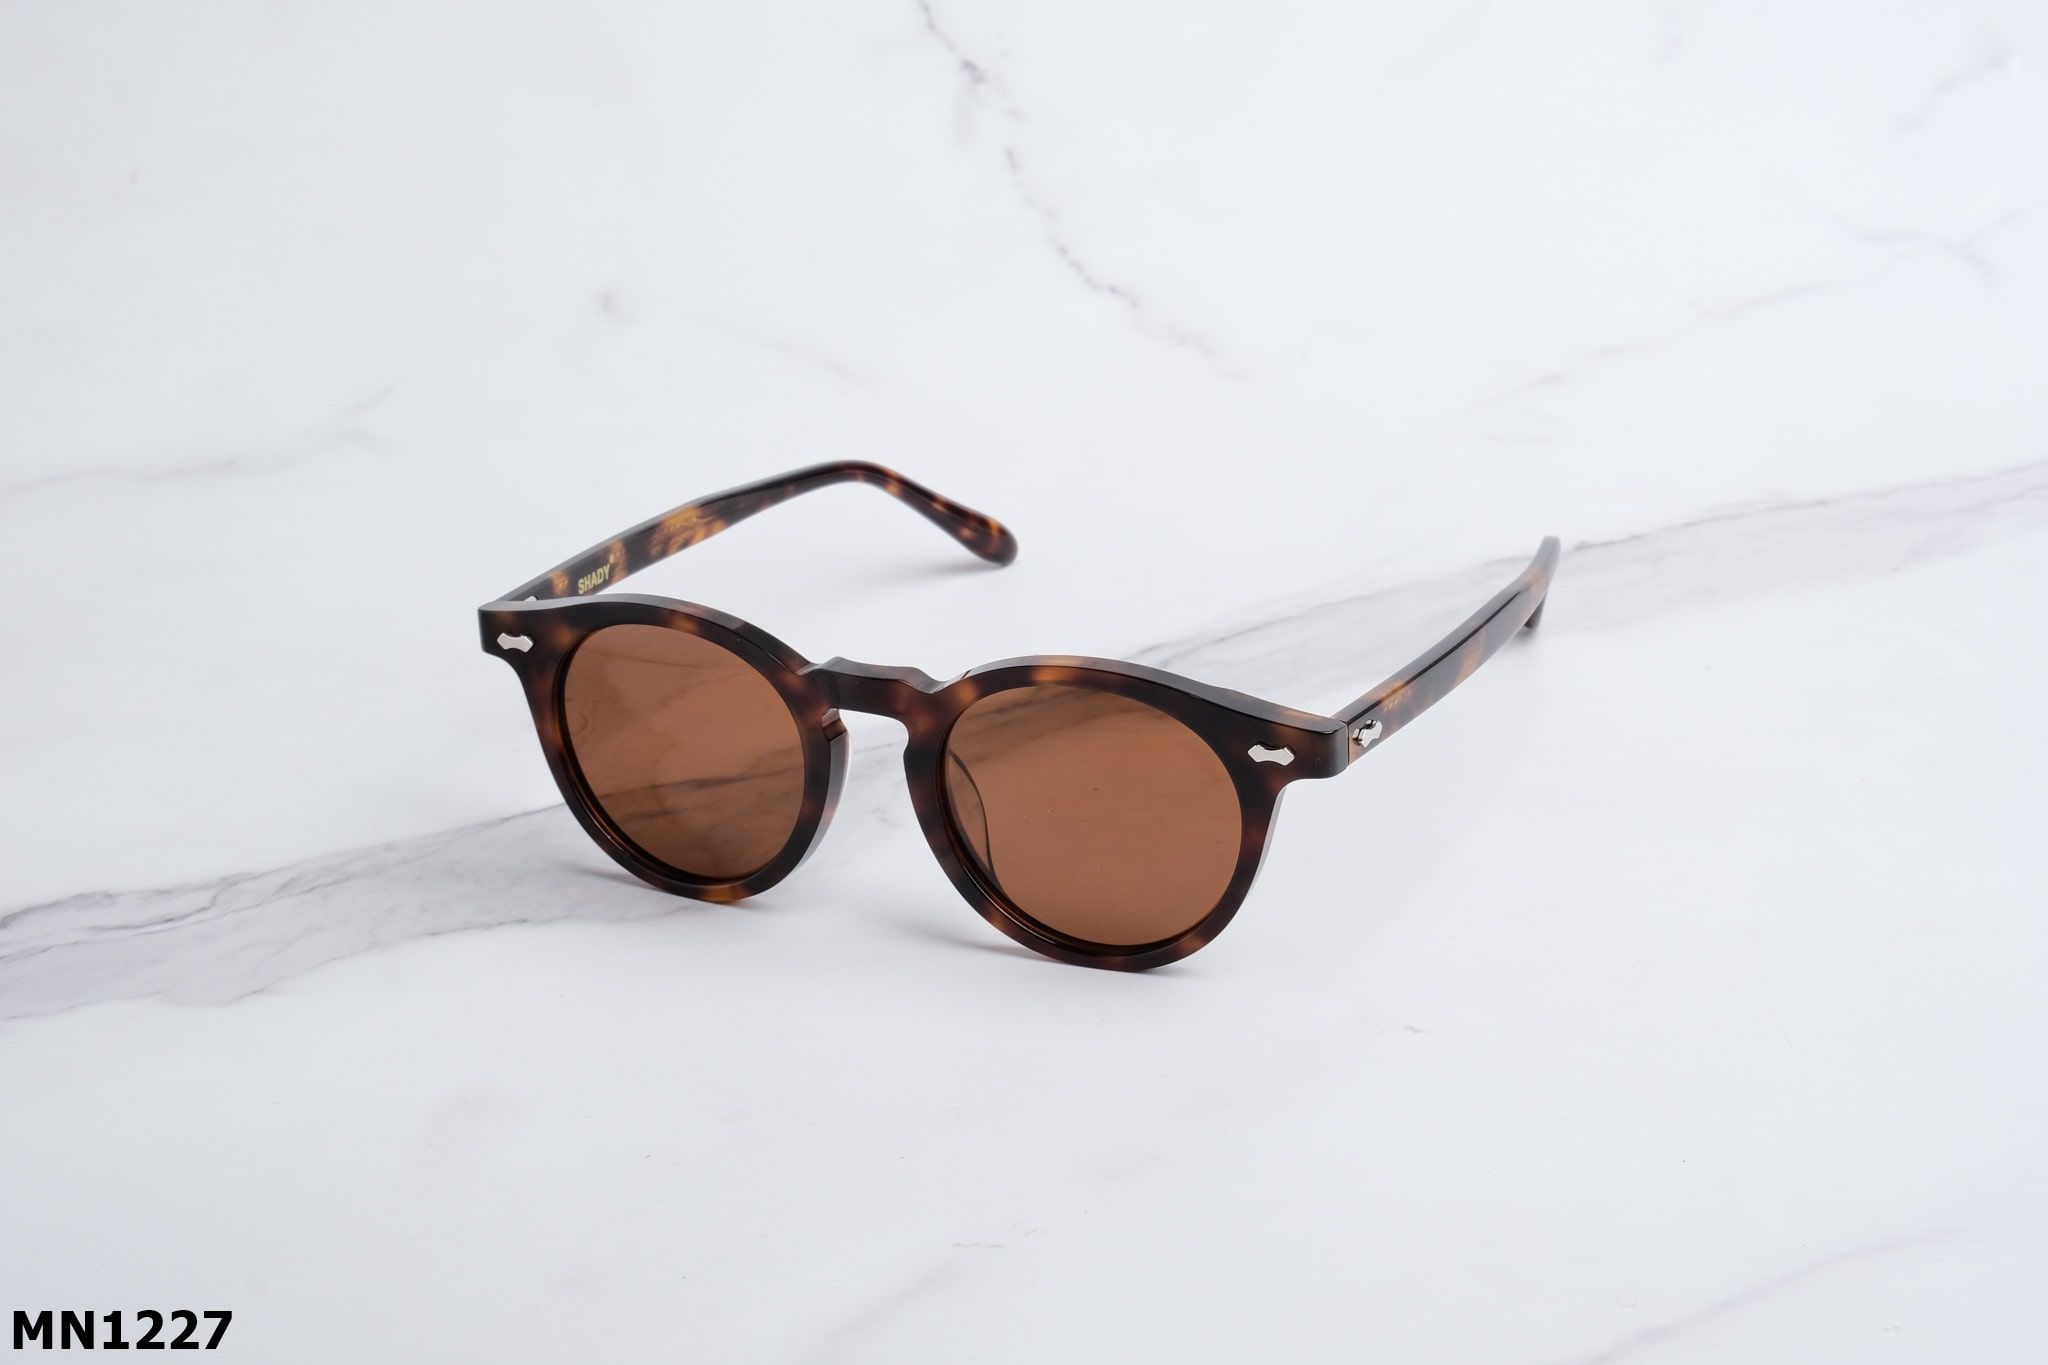  SHADY Eyewear - Sunglasses - MN1227 